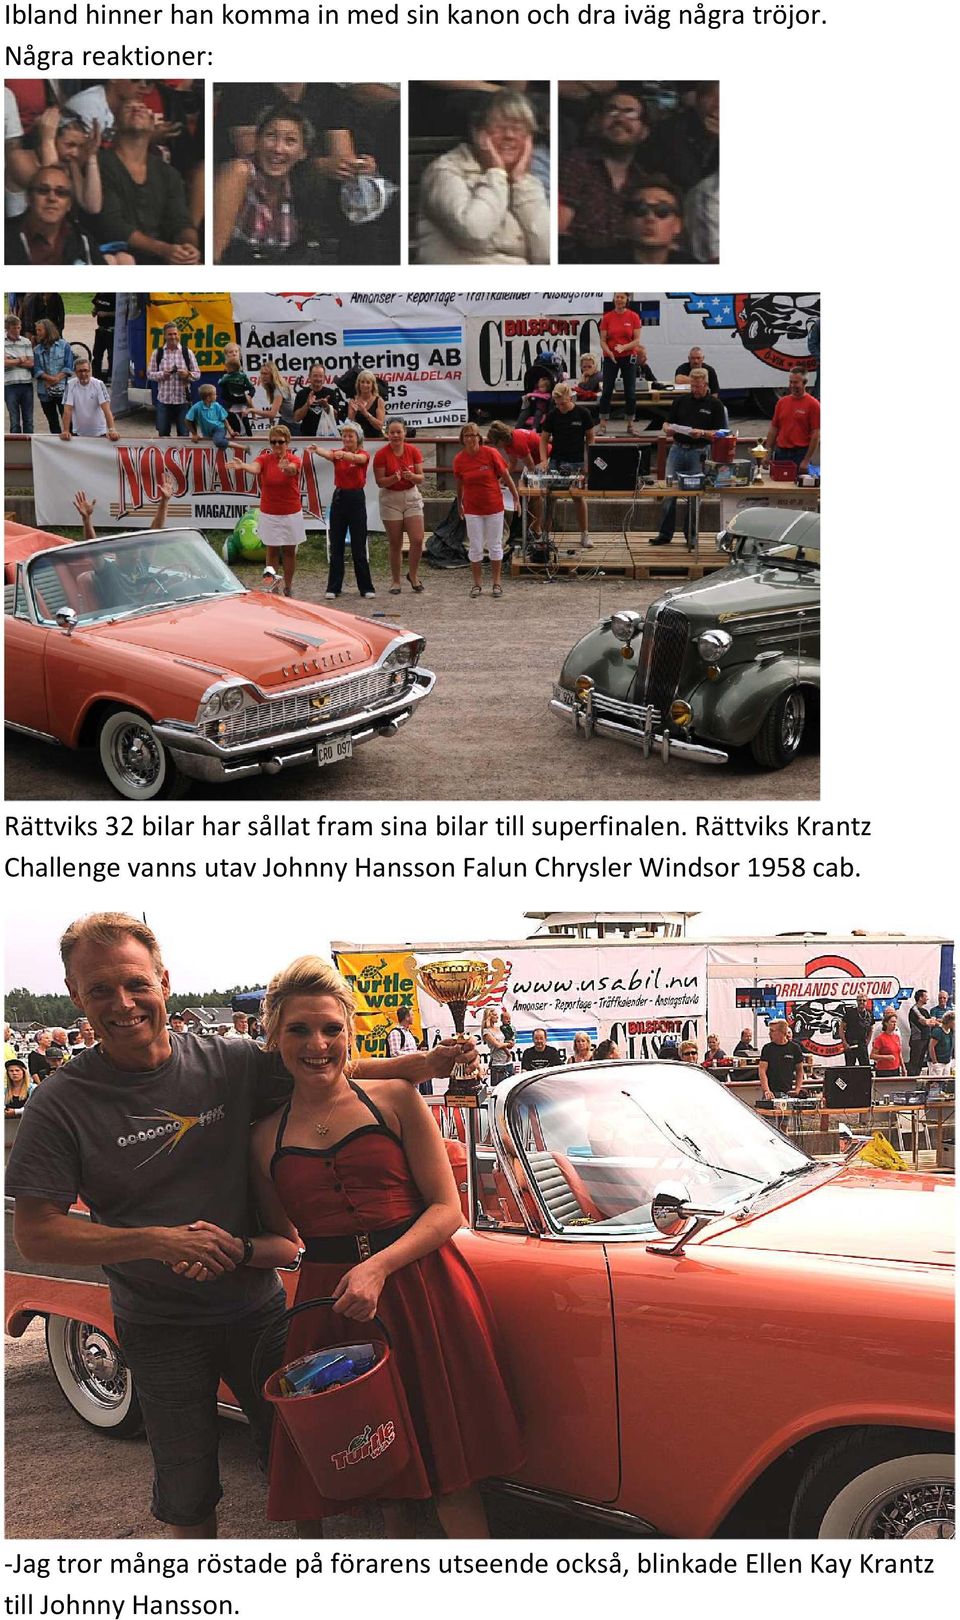 Rättviks Krantz Challenge vanns utav Johnny Hansson Falun Chrysler Windsor 1958 cab.